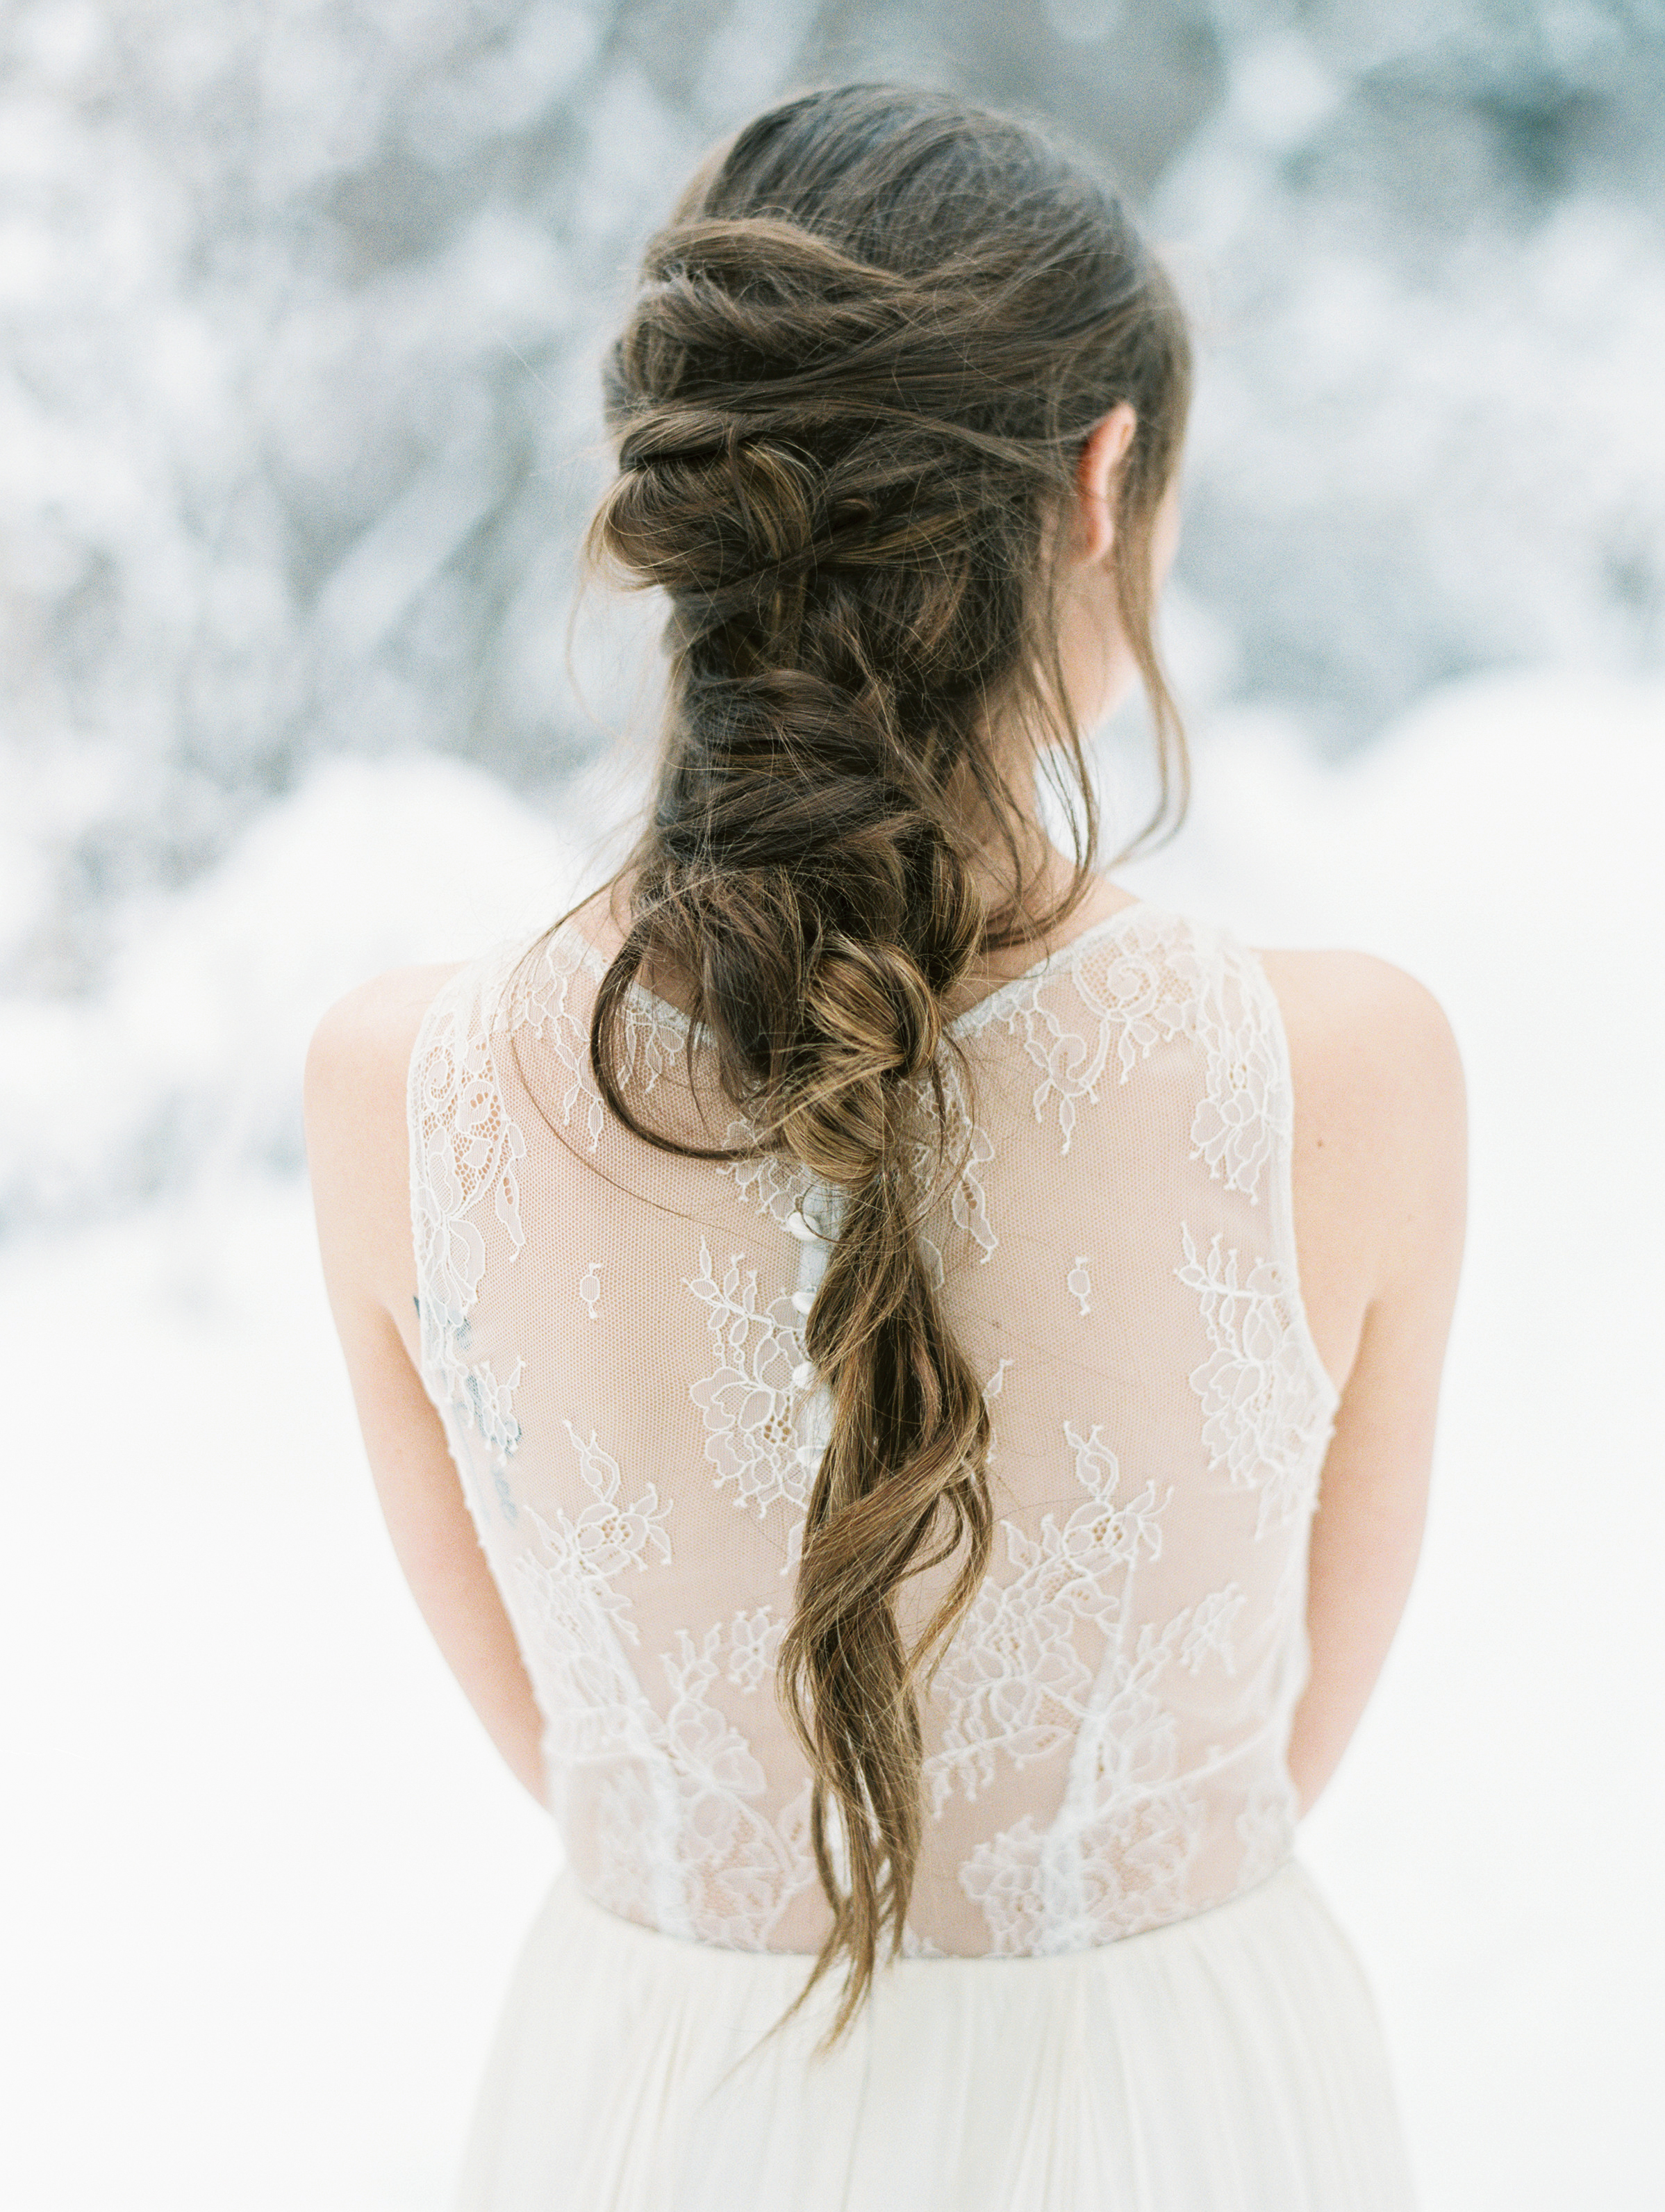 Romantic bridal hairstyles for the fine art bride by D'Arcy Benincosa, fine art destination photographer